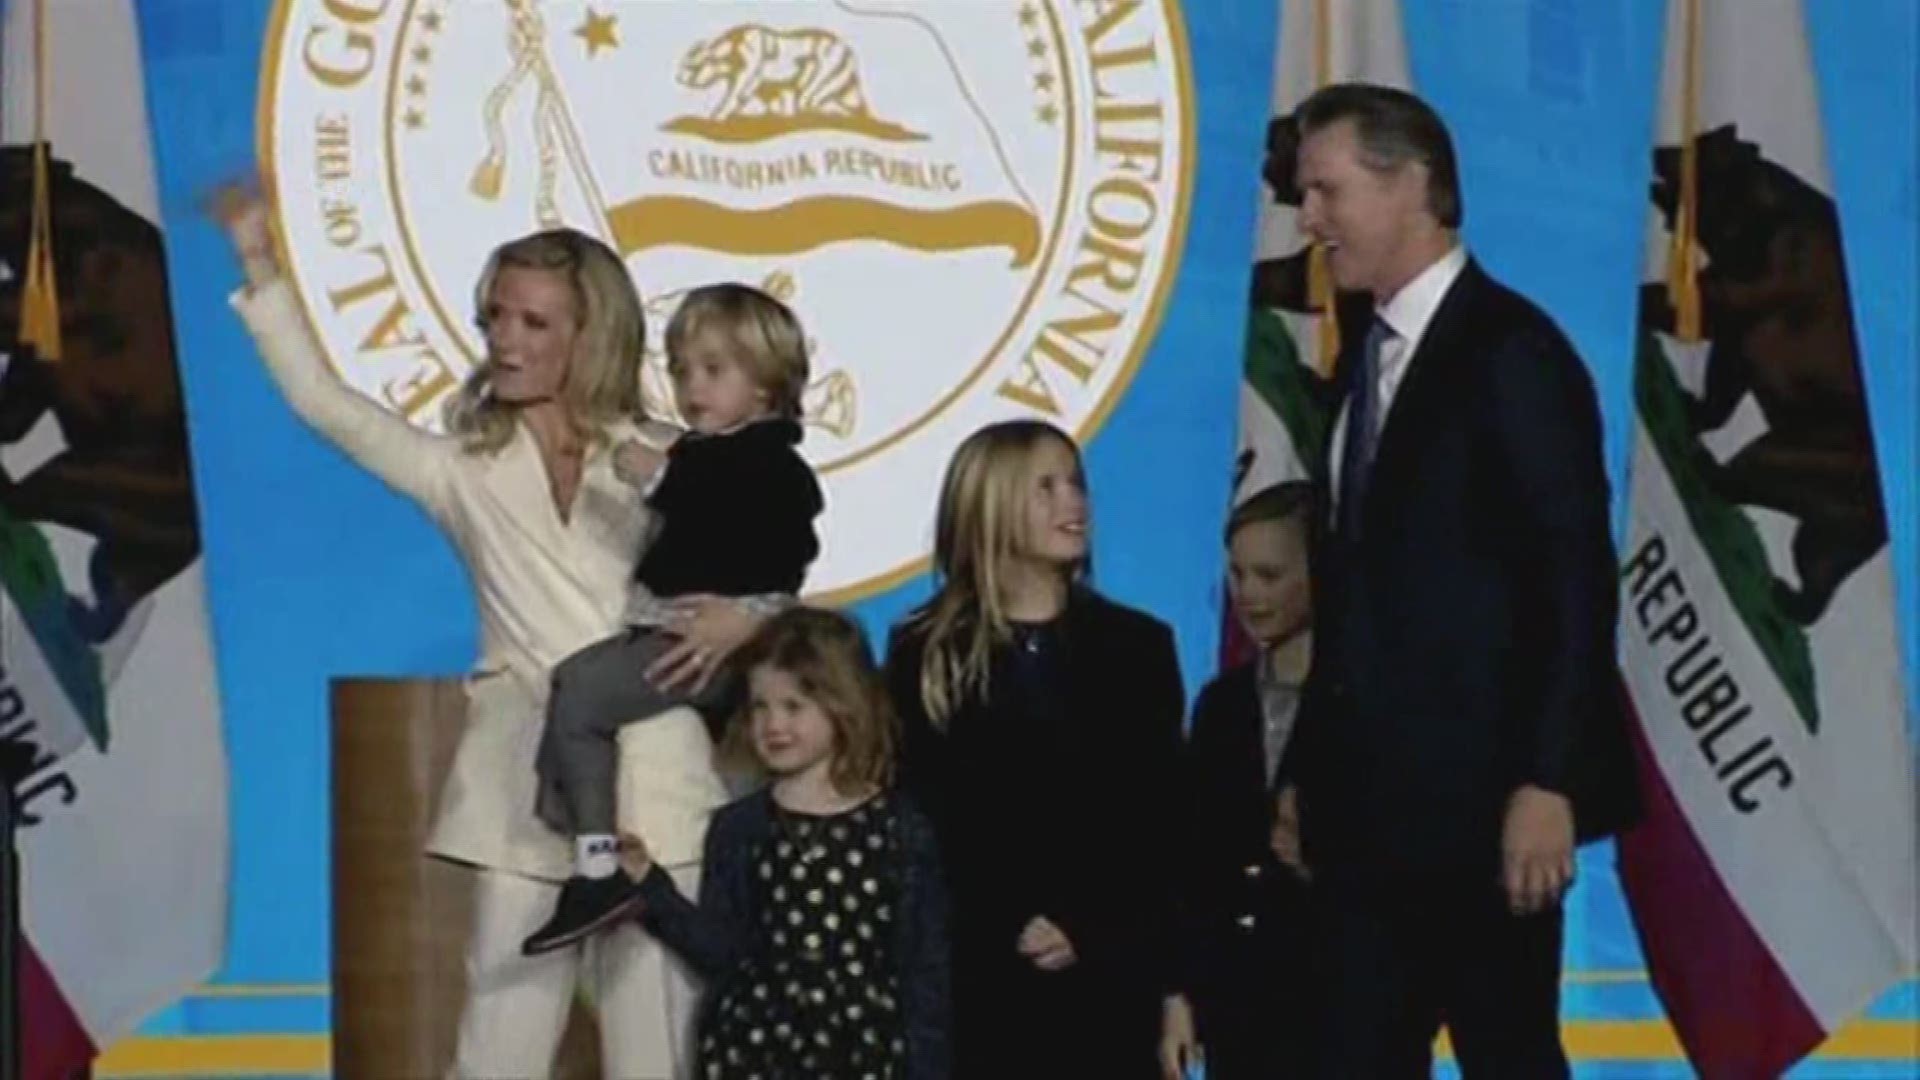 Raw: Governor Gavin Newsom Inauguration | Full ceremony